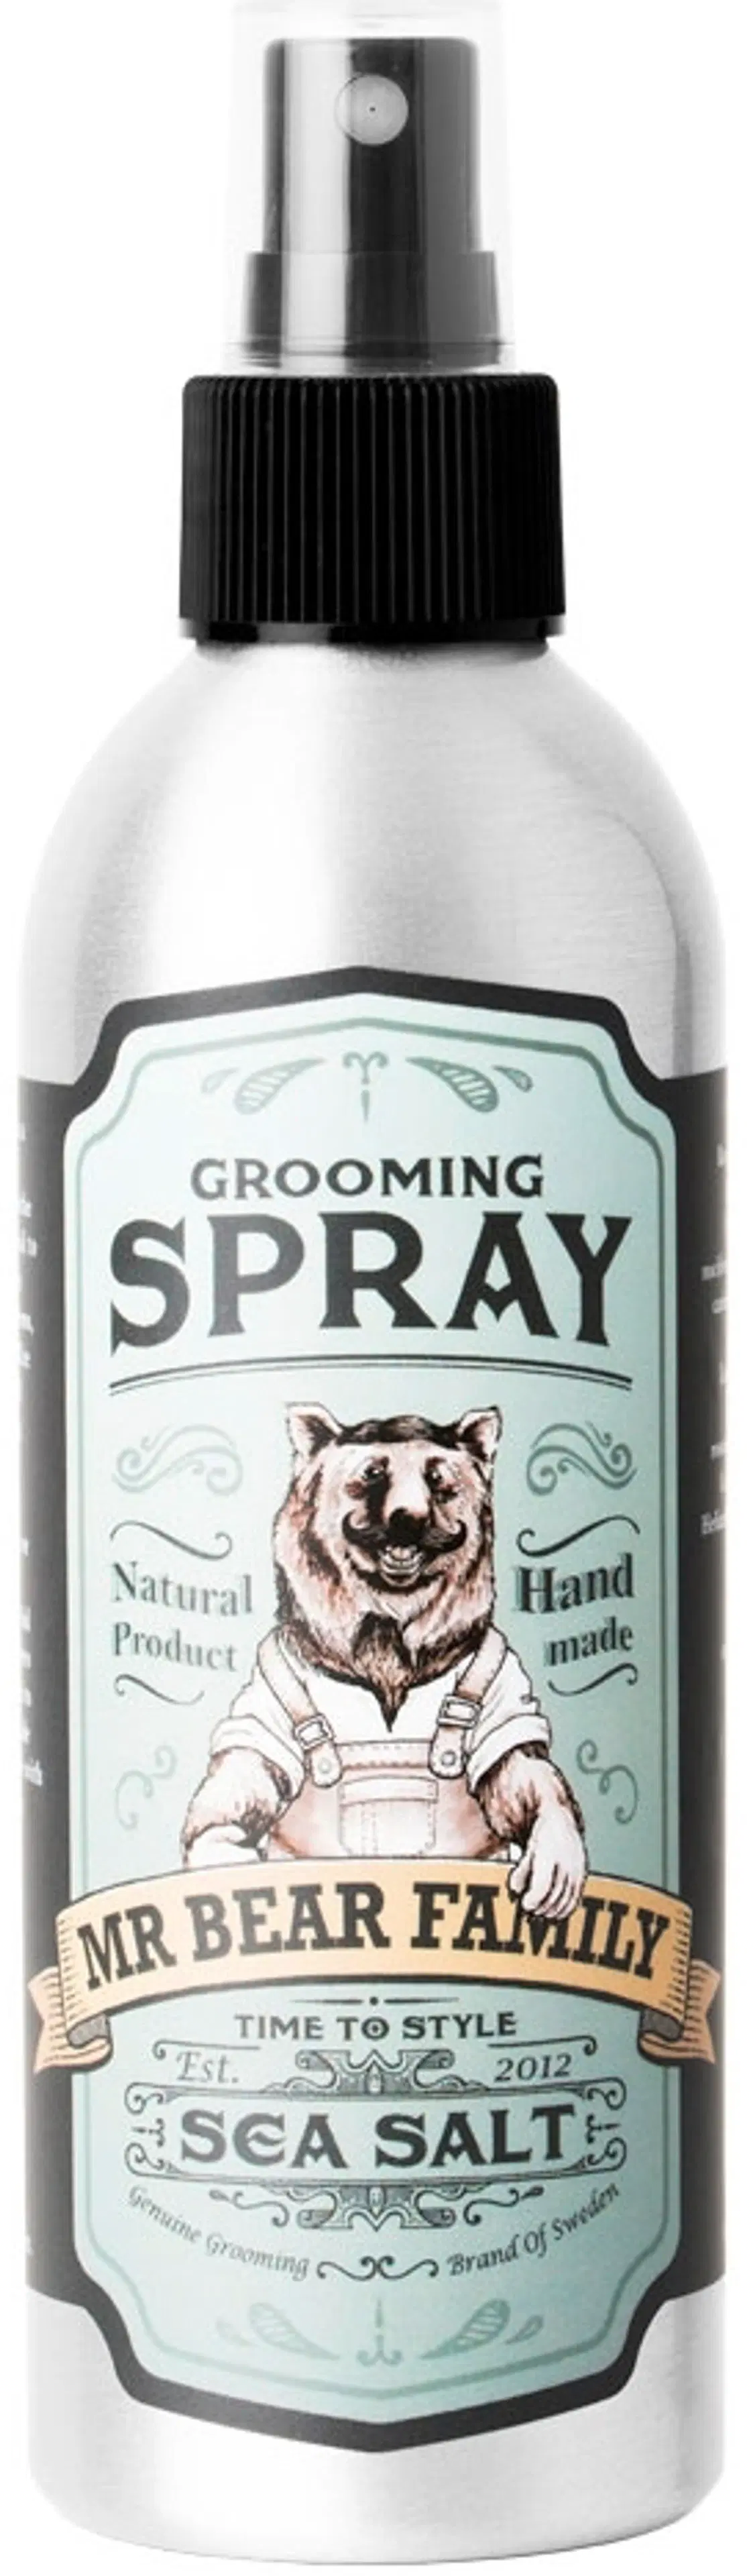 Mr Bear Family Grooming Spray 200ml